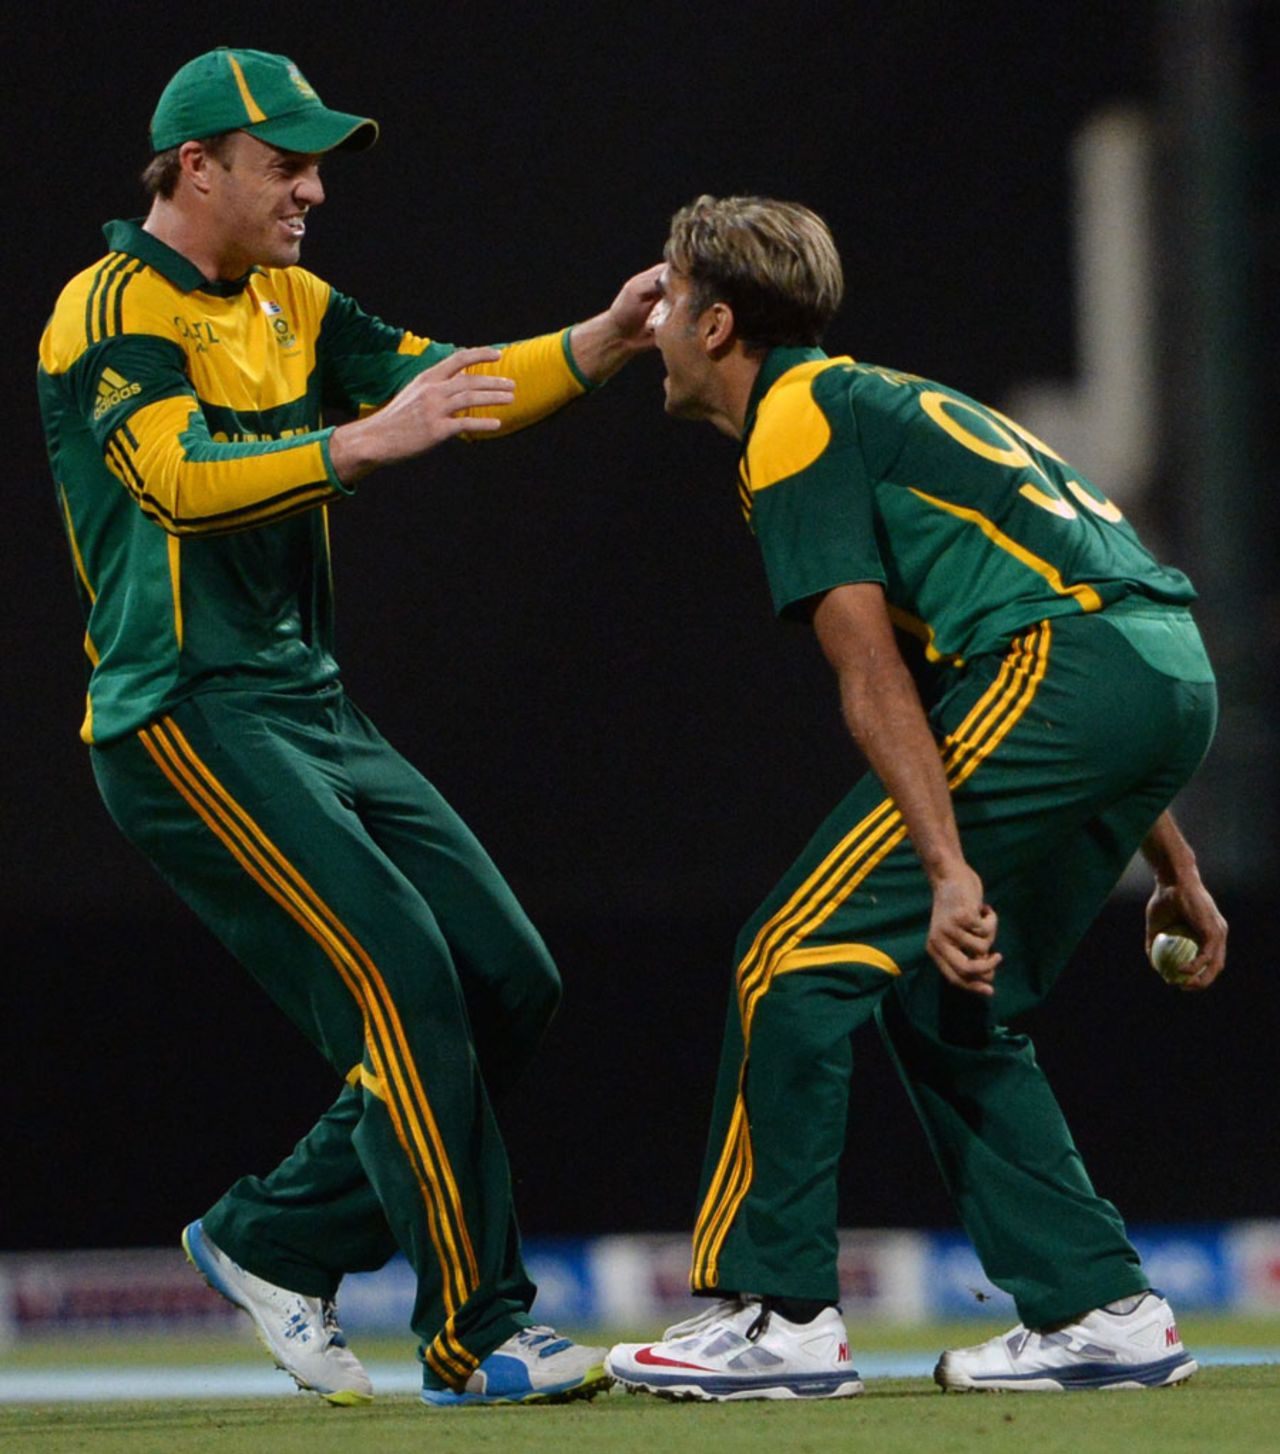 Imran Tahir and AB de Villiers are elated after Umar Akmal's dismissal, Pakistan v South Africa, 3rd ODI, Abu Dhabi, November 6, 2013